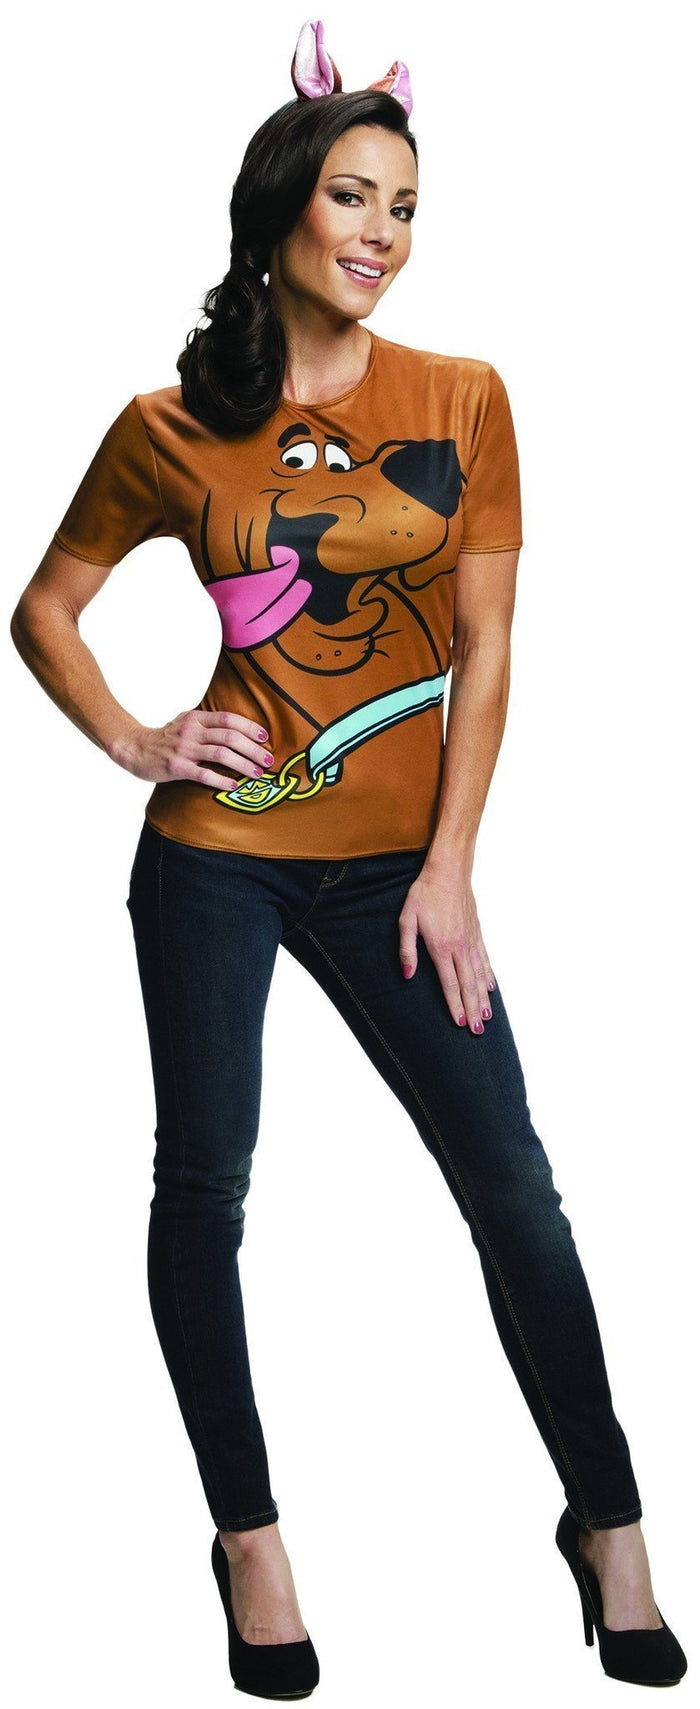 Scooby Doo Costume Top for Adults - Warner Bros Scooby Doo